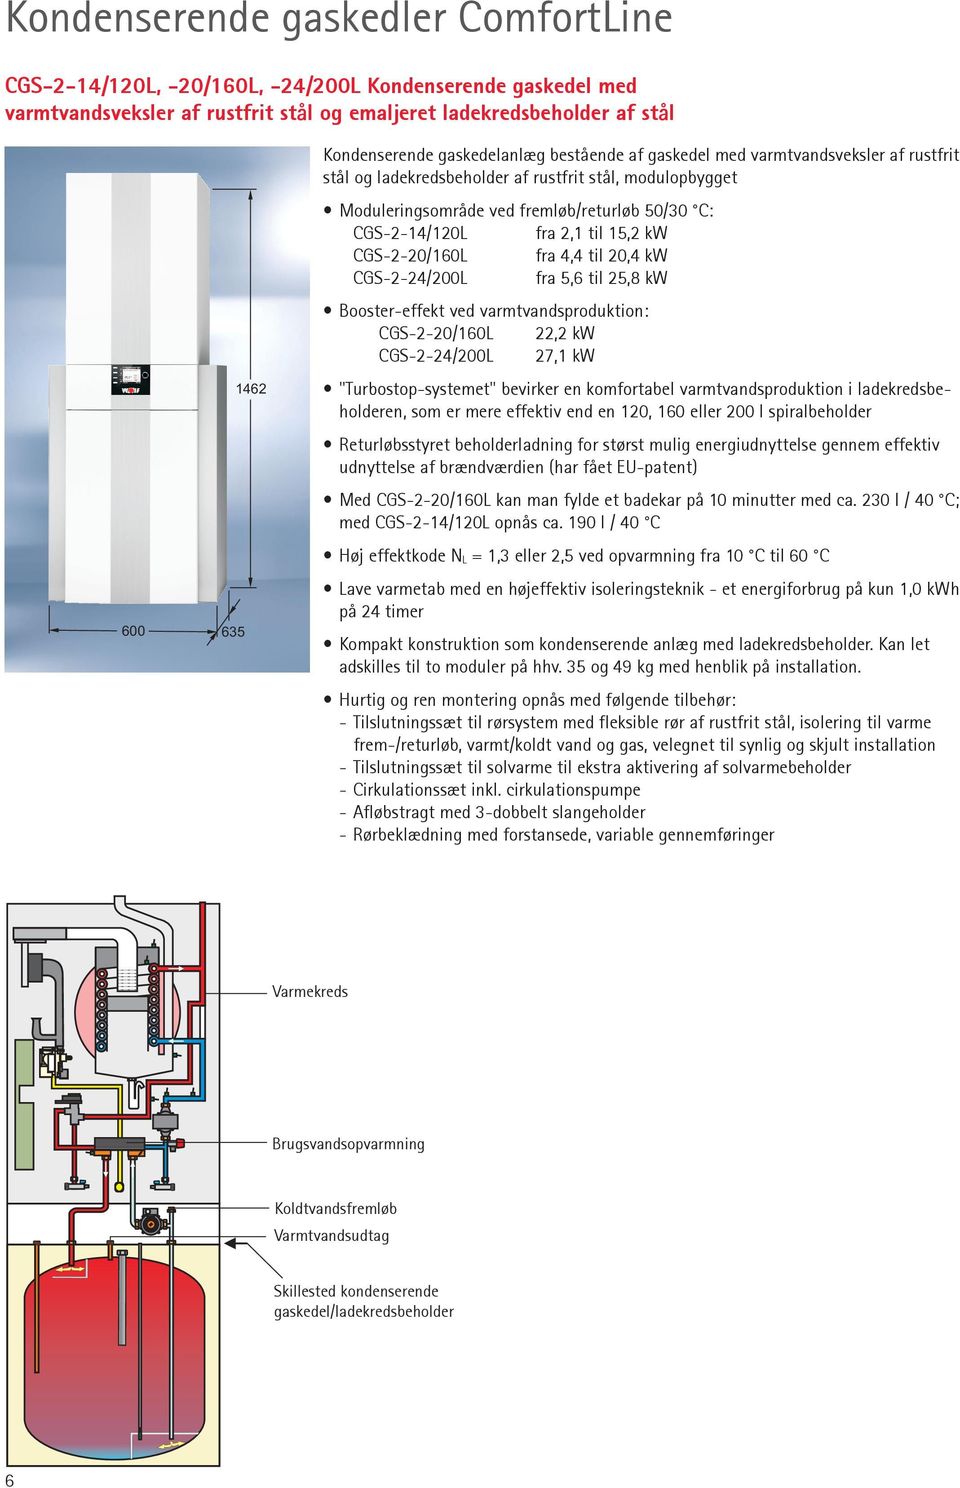 til 15,2 kw CGS-2-20/160L fra 4,4 til 20,4 kw CGS-2-24/200L fra 5,6 til 25,8 kw Booster-effekt ved varmtvandsproduktion: CGS-2-20/160L 22,2 kw CGS-2-24/200L 27,1 kw "Turbostop-systemet" bevirker en